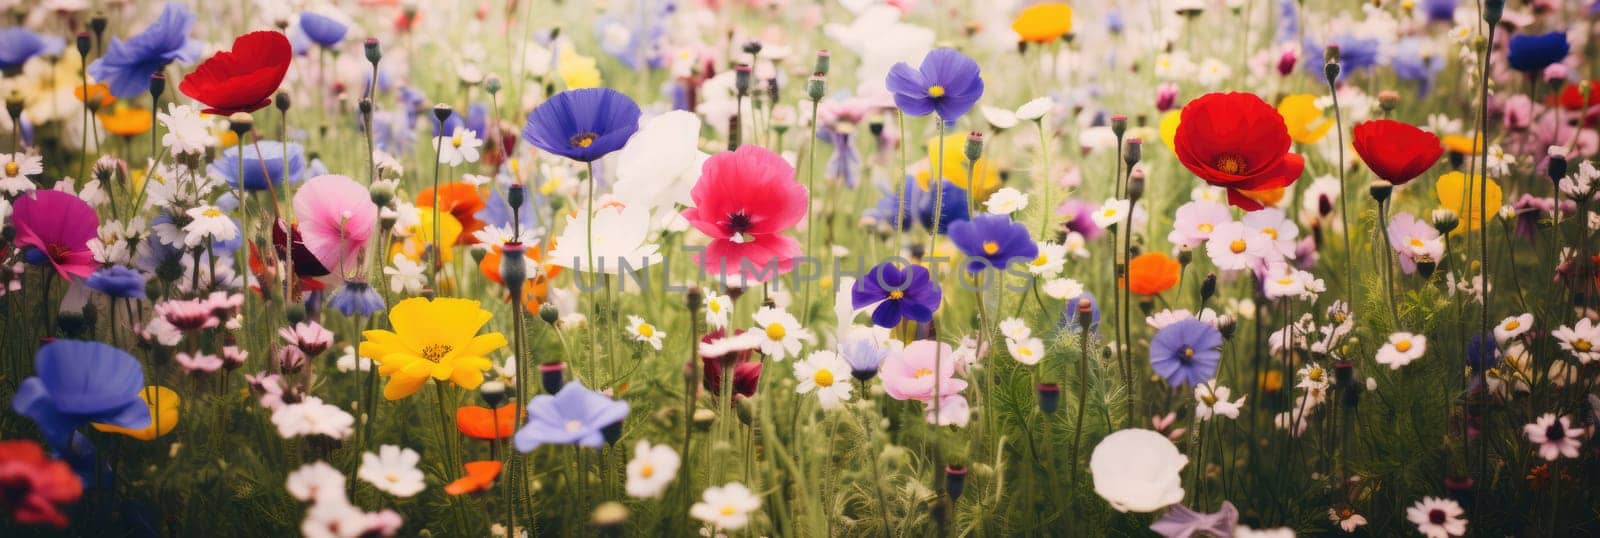 Beautiful cosmos flowers blooming in garden. Flower field blooming in spring by natali_brill